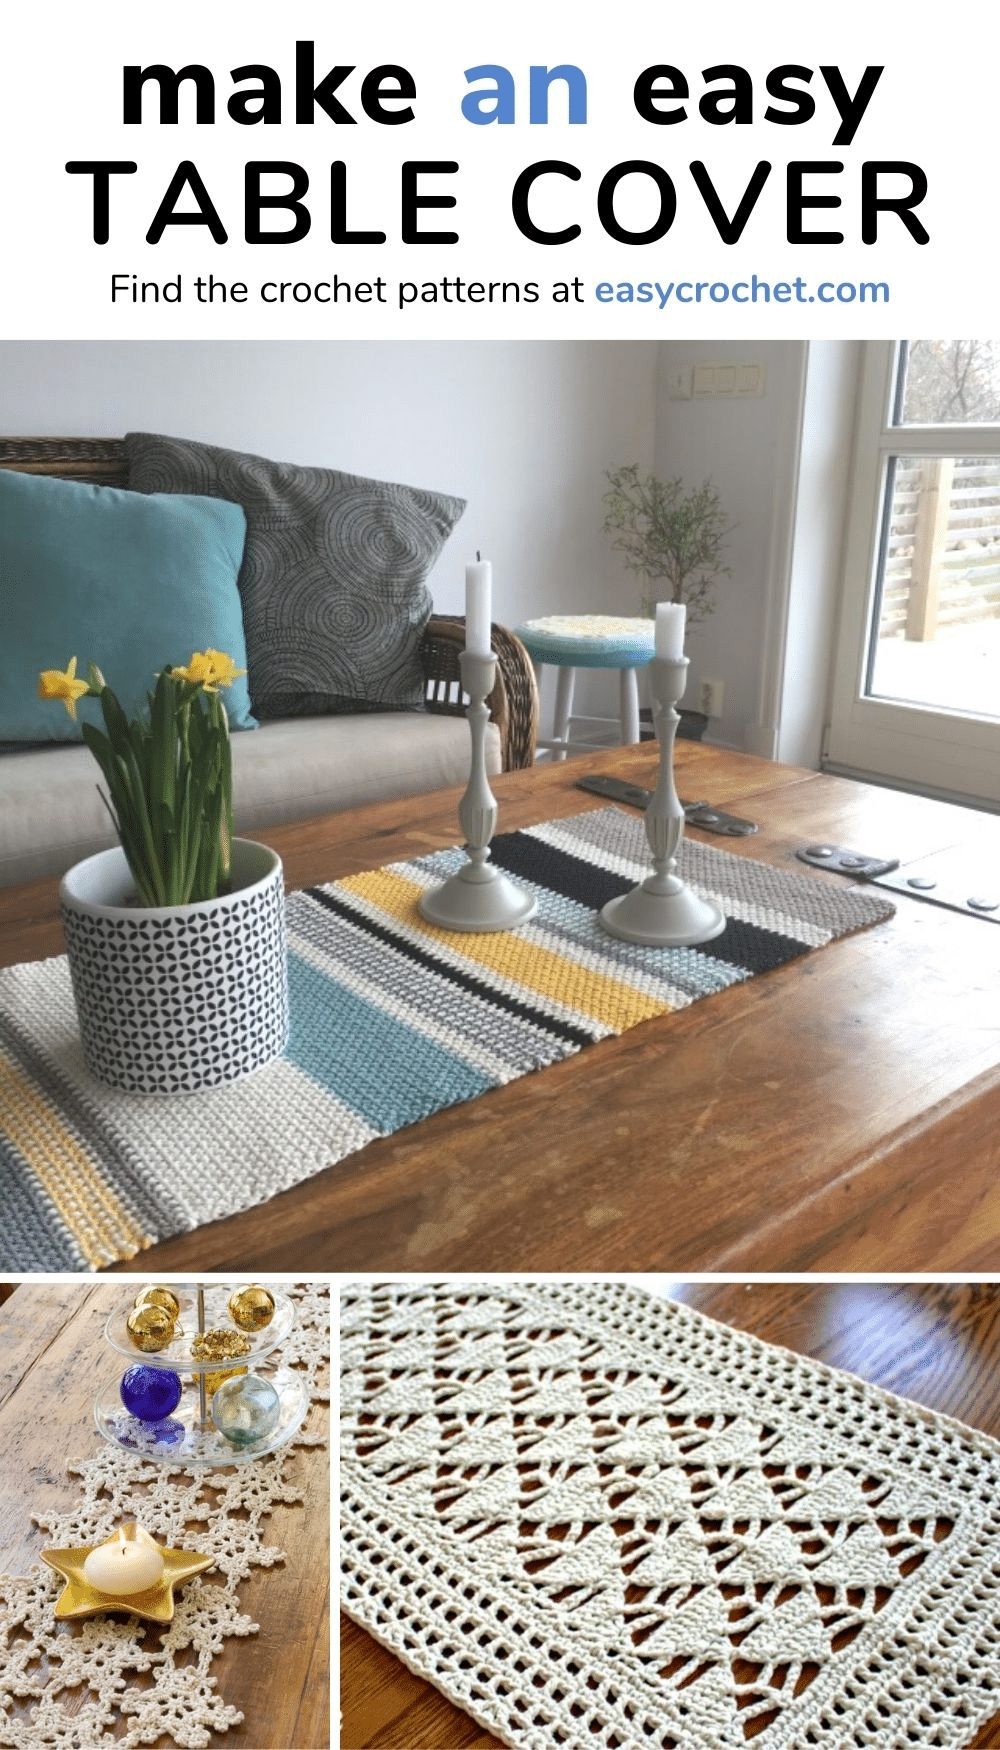 Free crochet table runner / table cover patterns